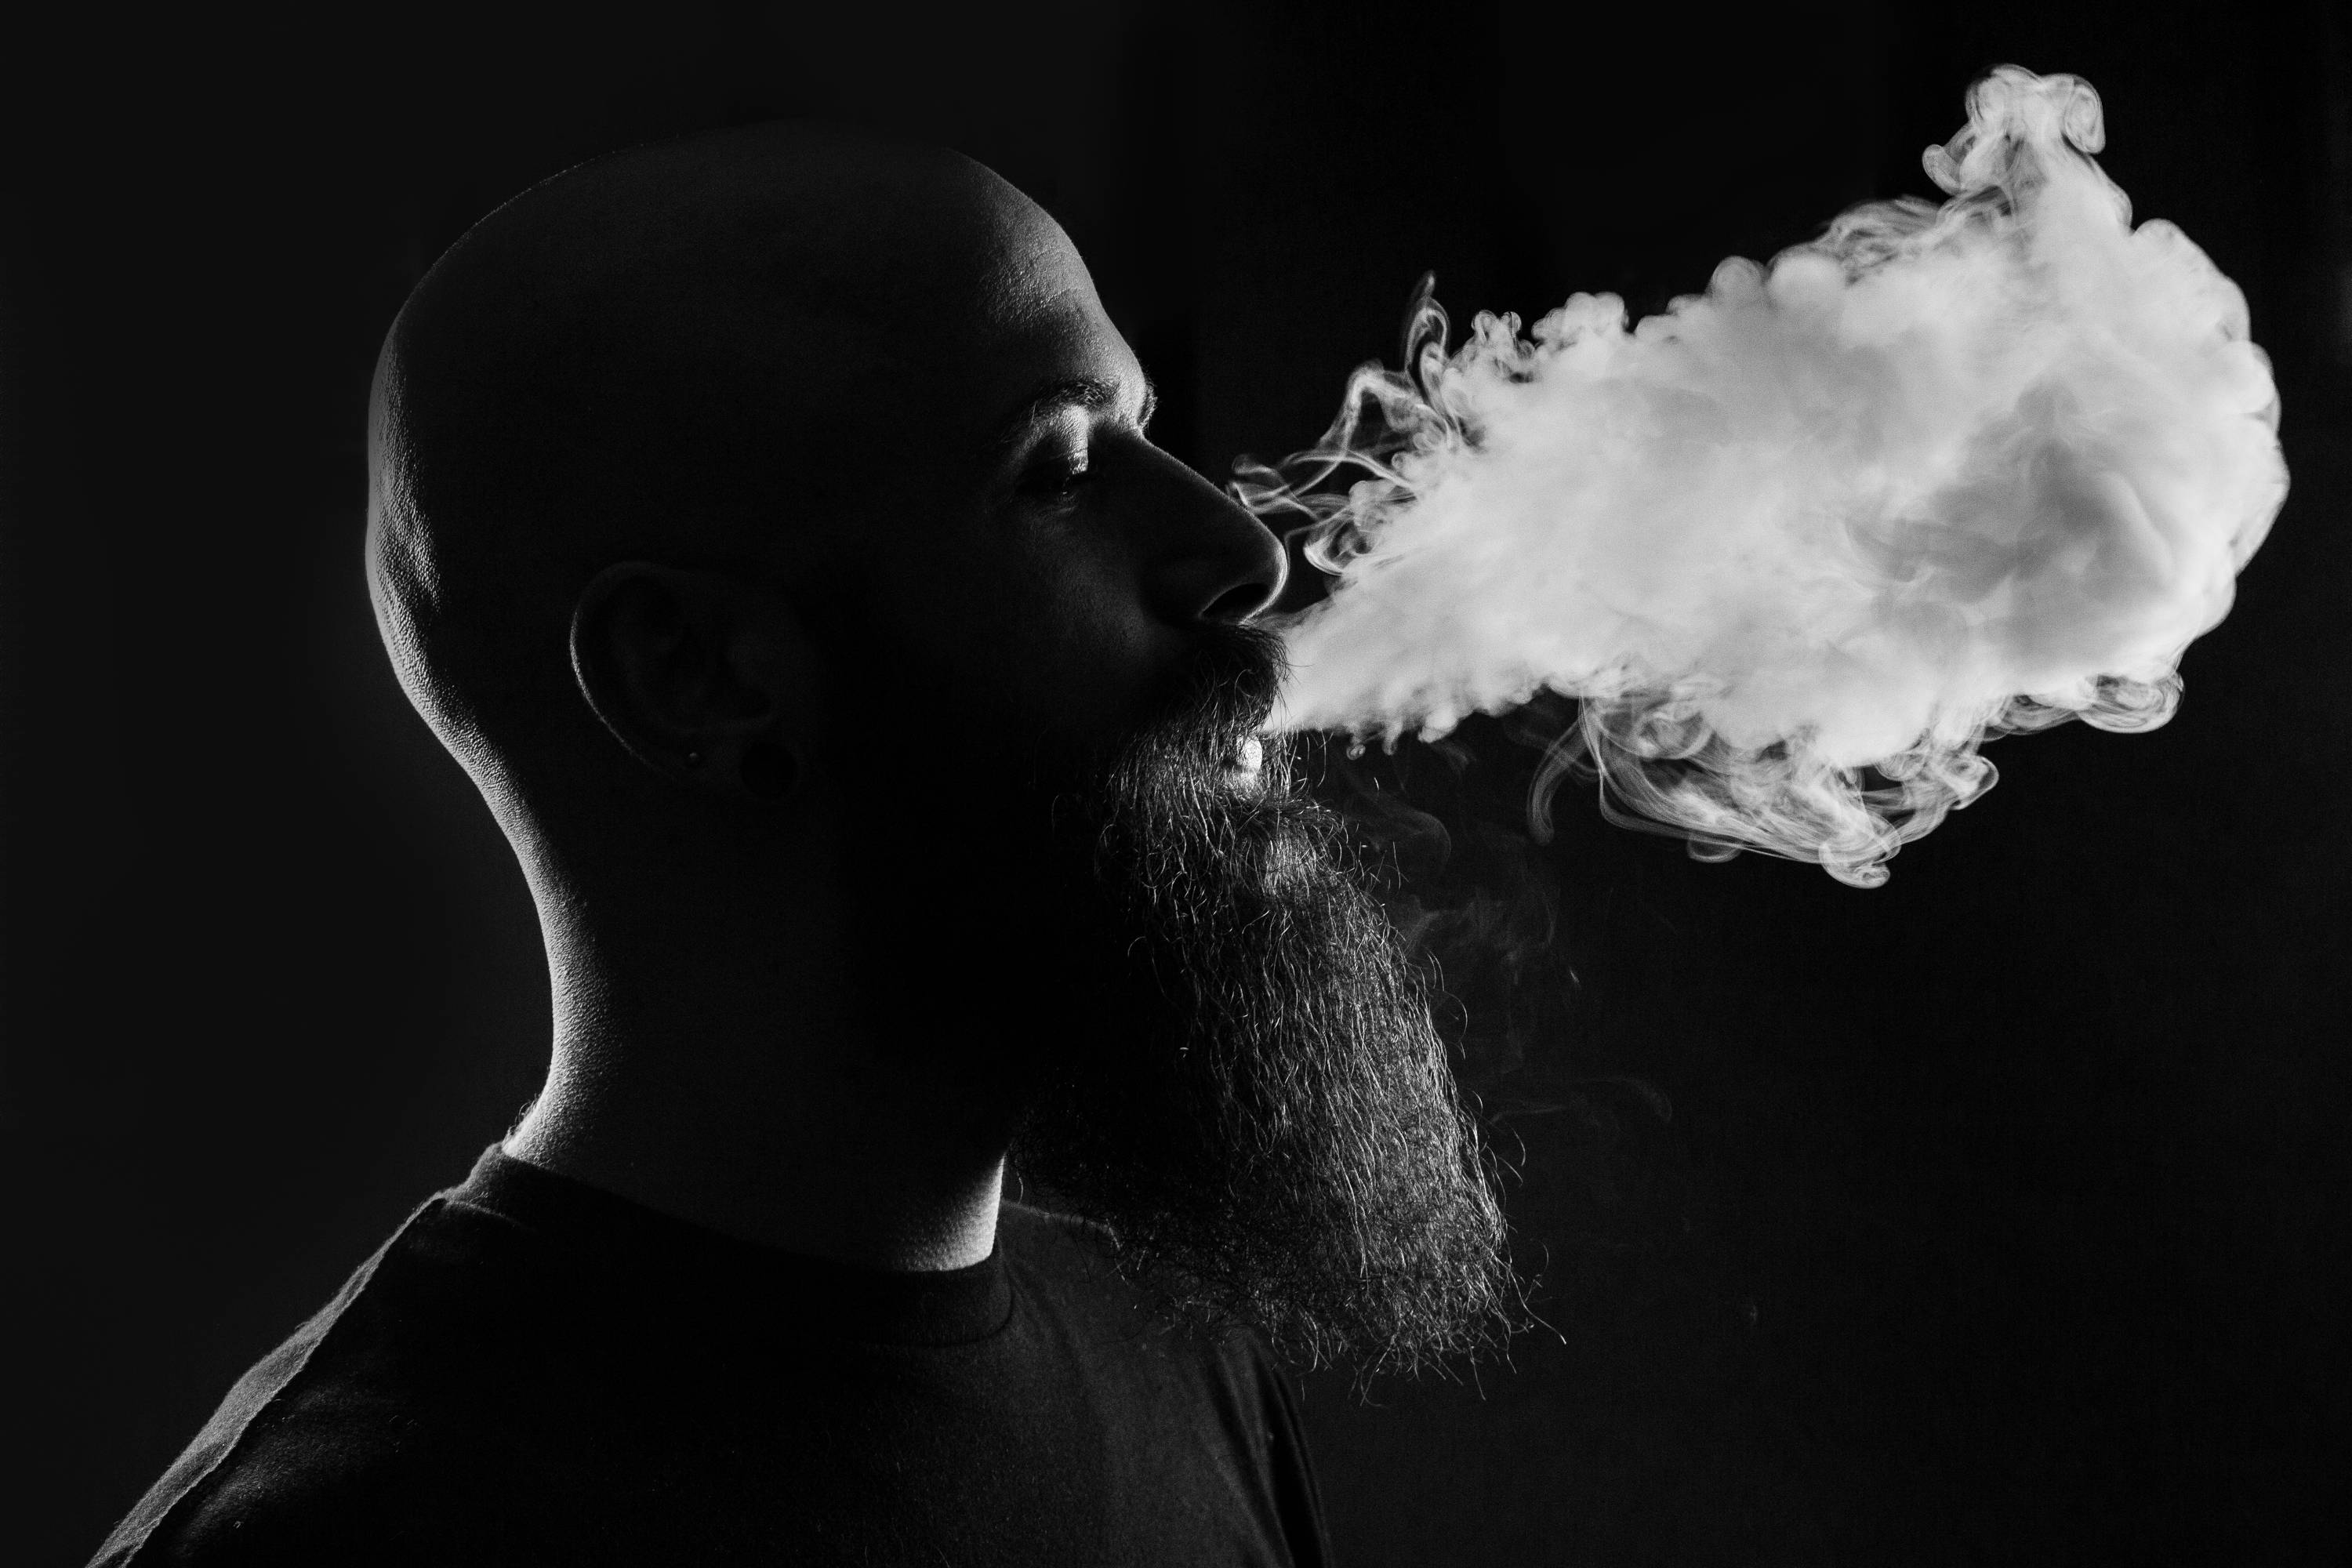 Black and white image of a bald man with a long beard exhaling vape smoke.